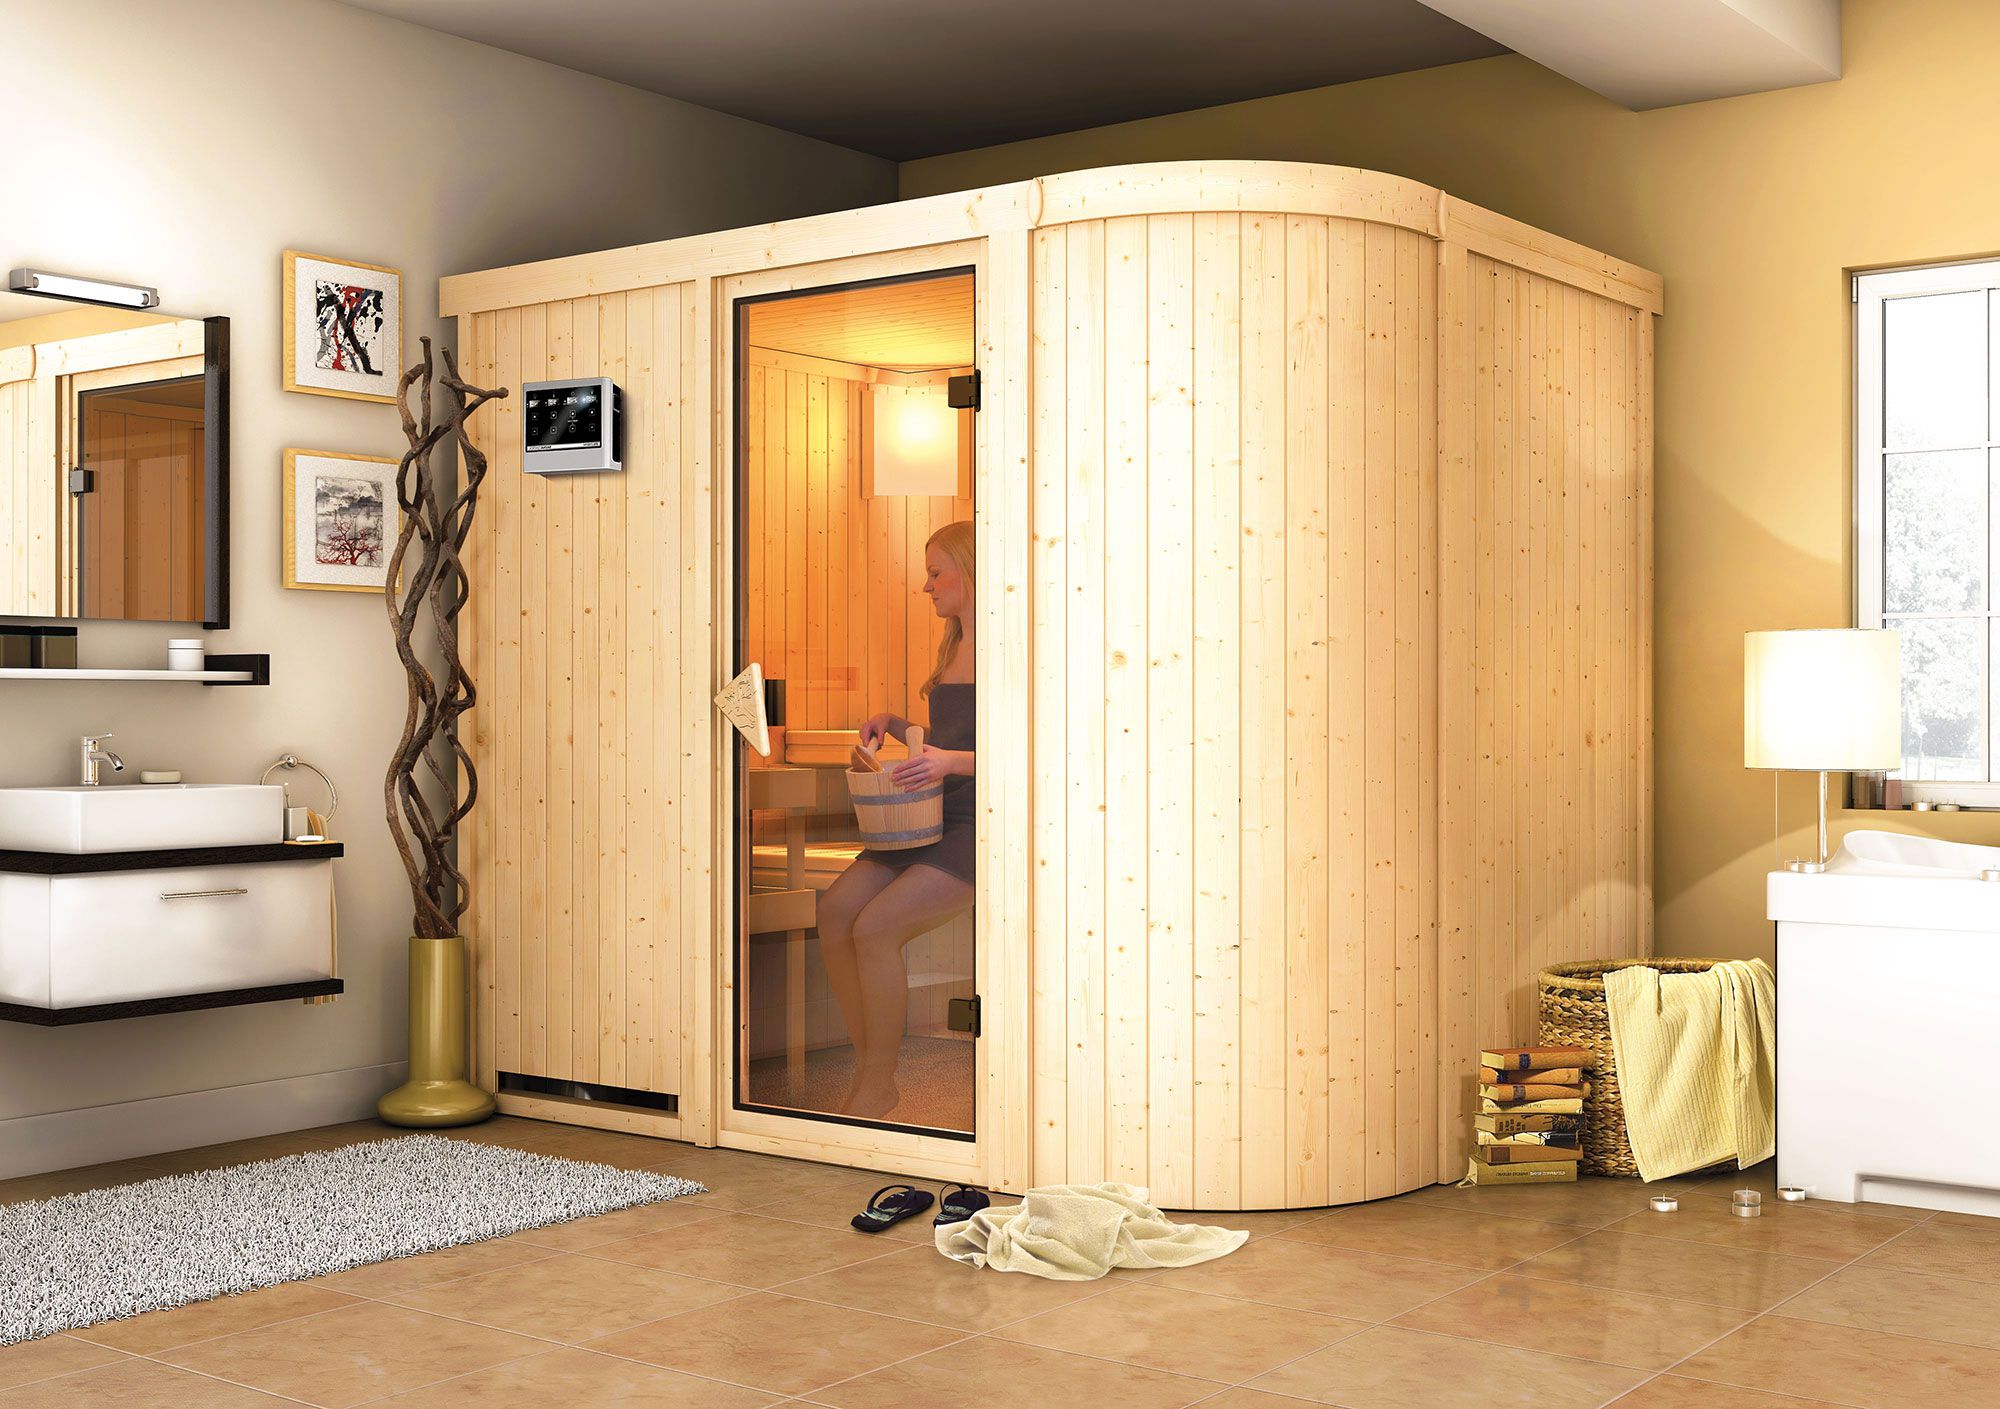 Sauna "Einar" SET met bronskleurige deur & kachel BIO 9 kW - 231 x 170 x 198 cm (B x D x H)